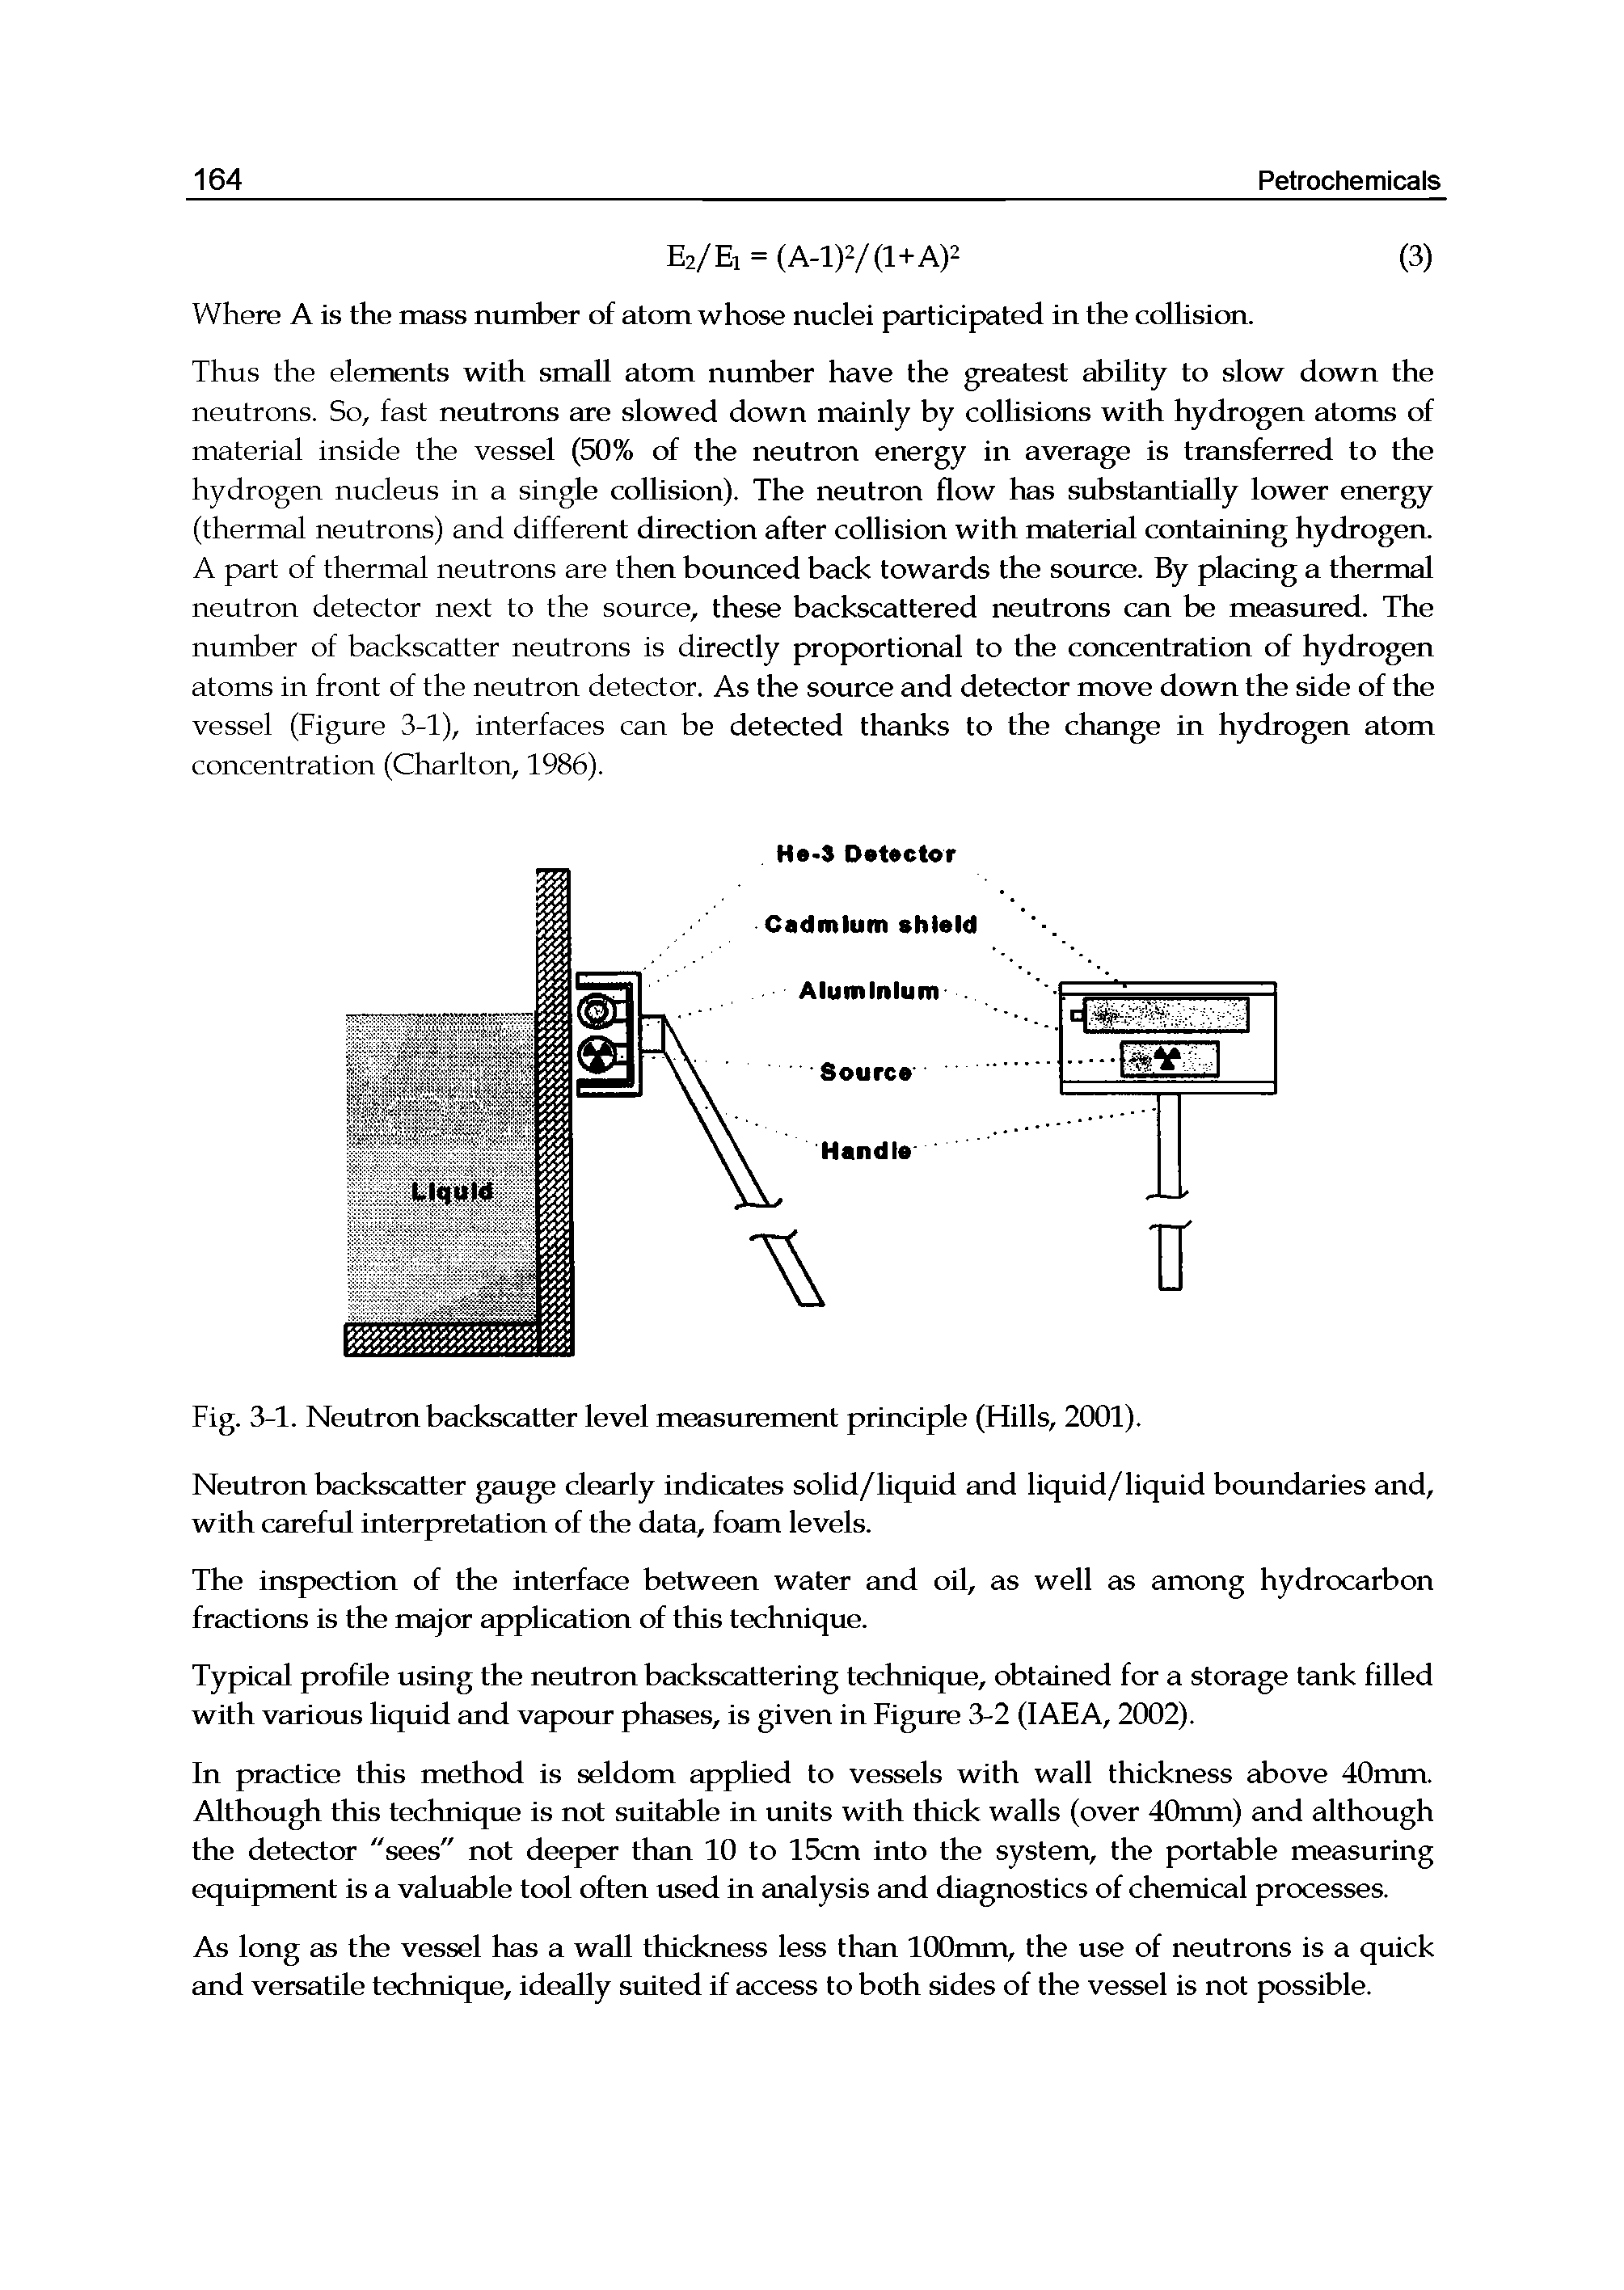 Fig. 3-1. Neutron backscatter level measurement principle (Hills, 2001).